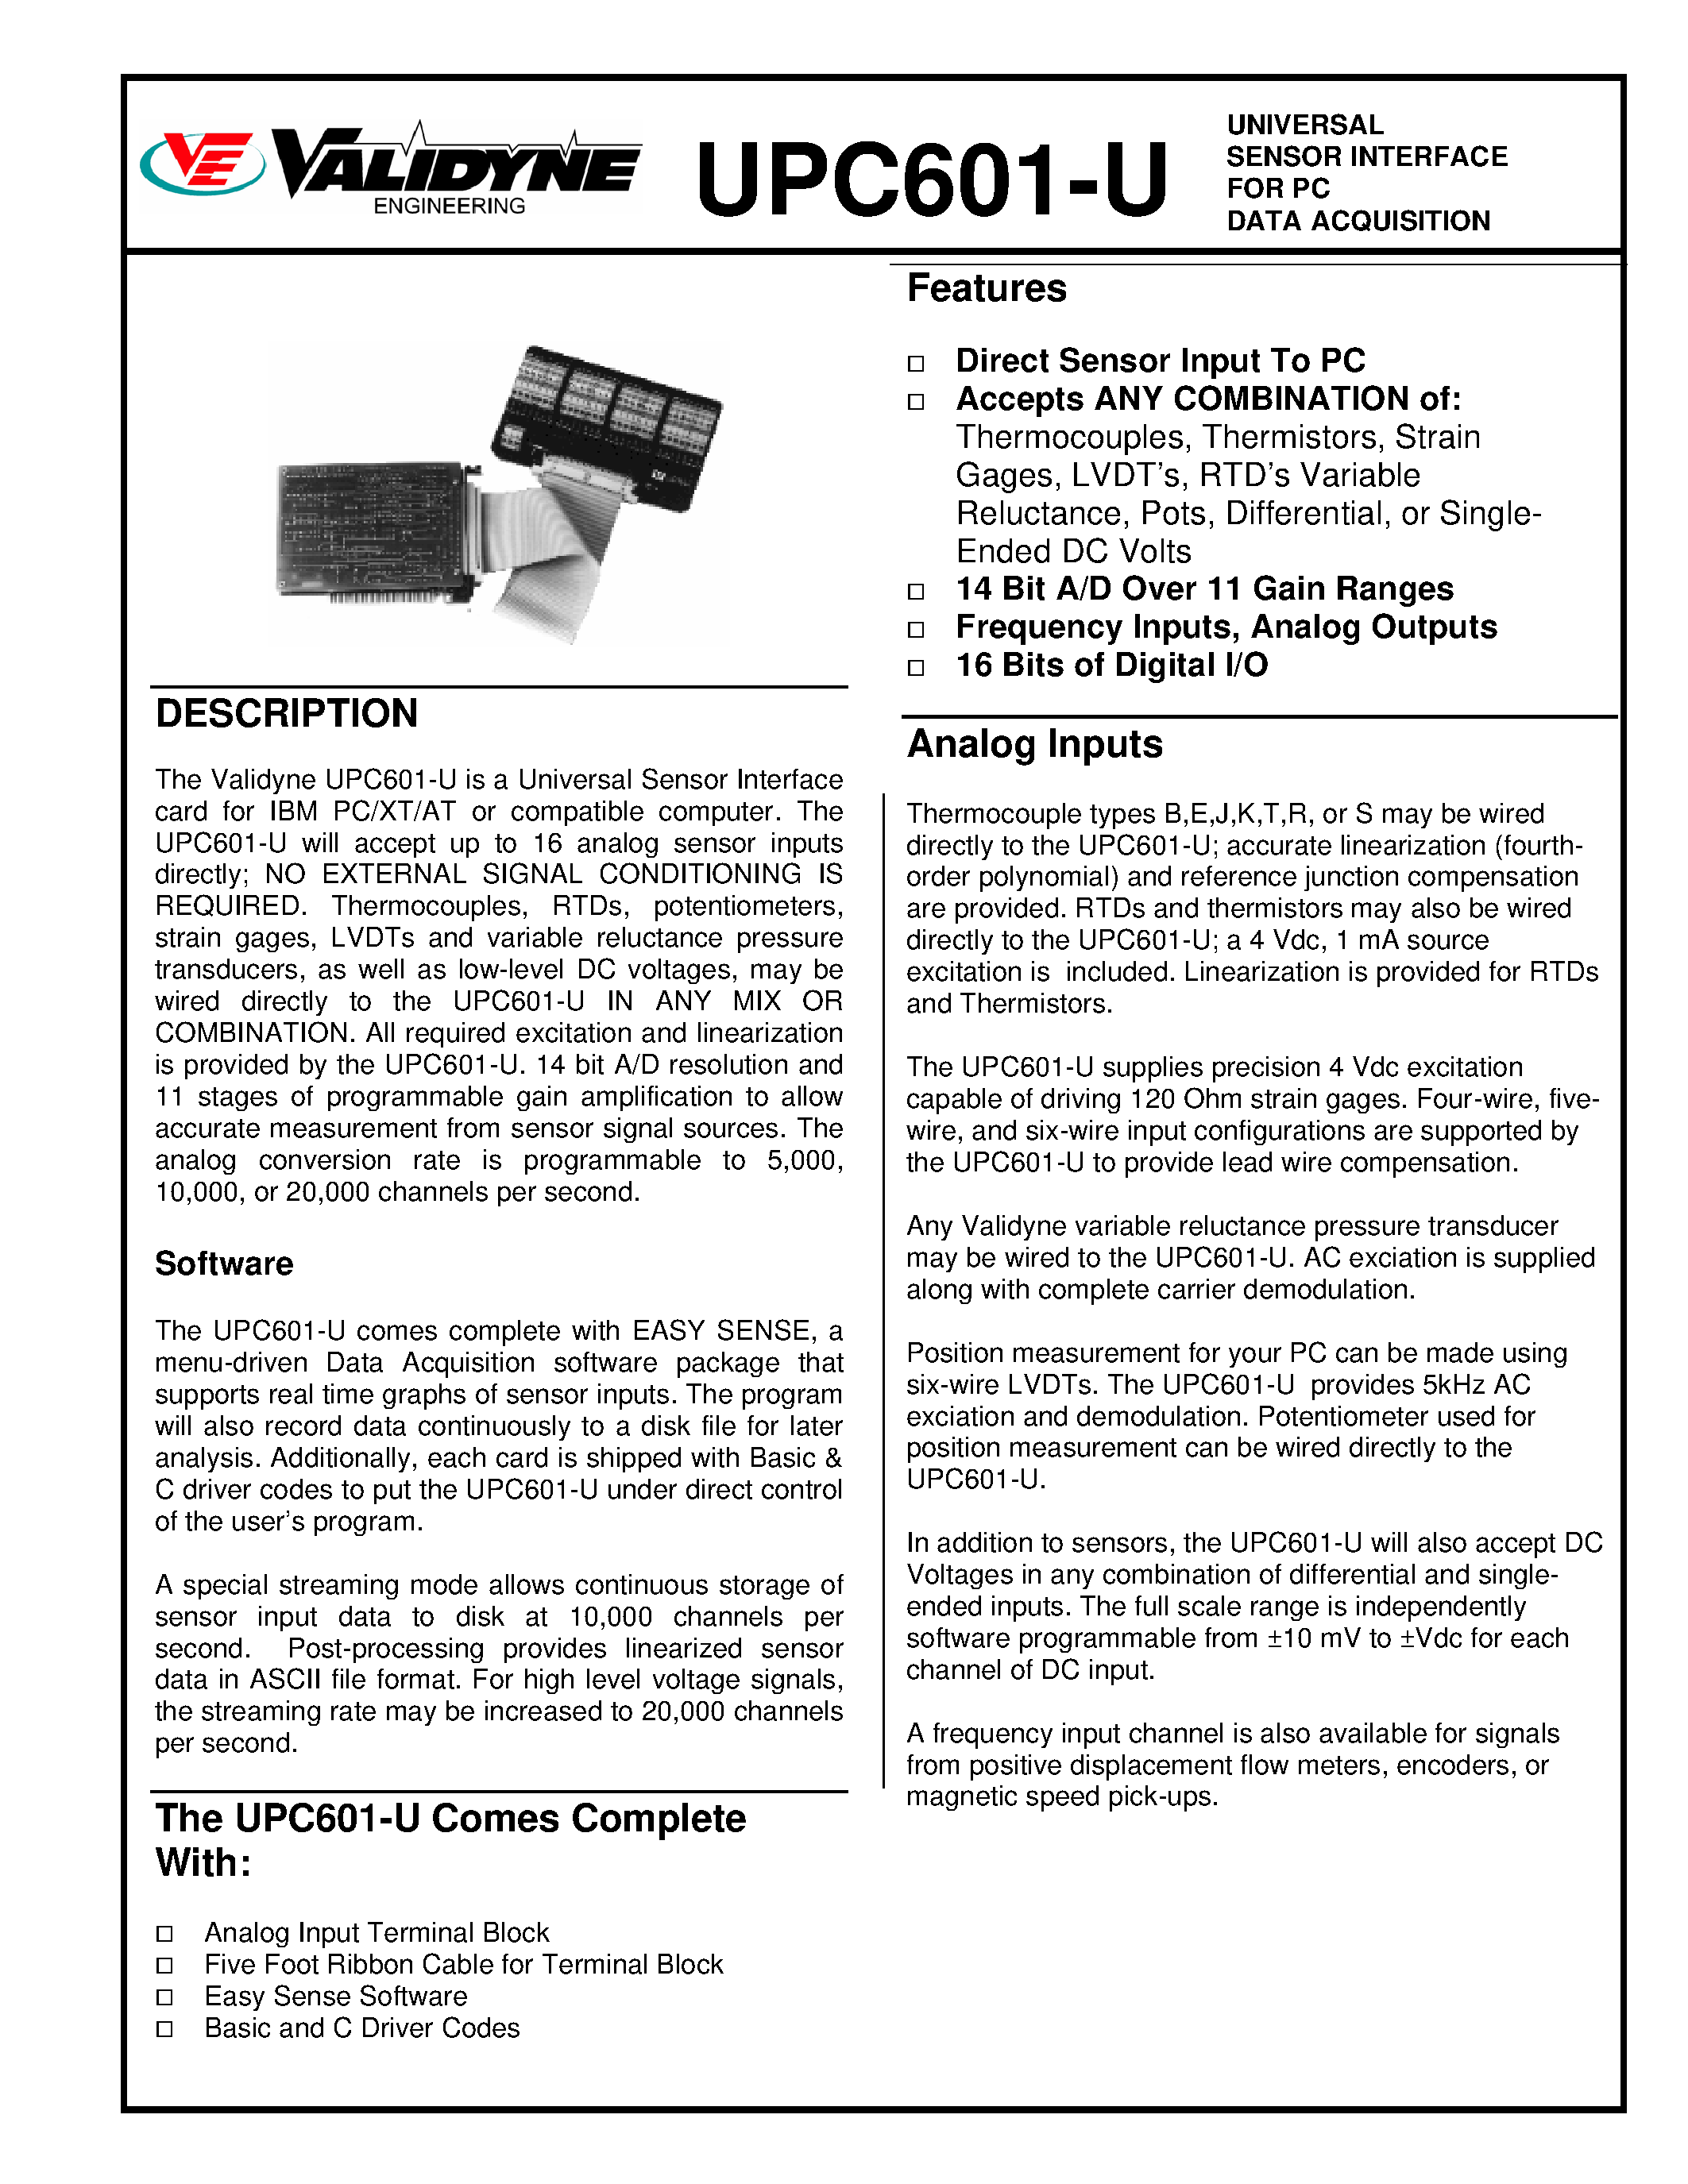 Даташит UPC601-U - Universal Sensor Interface for PC Data Acquisition страница 1